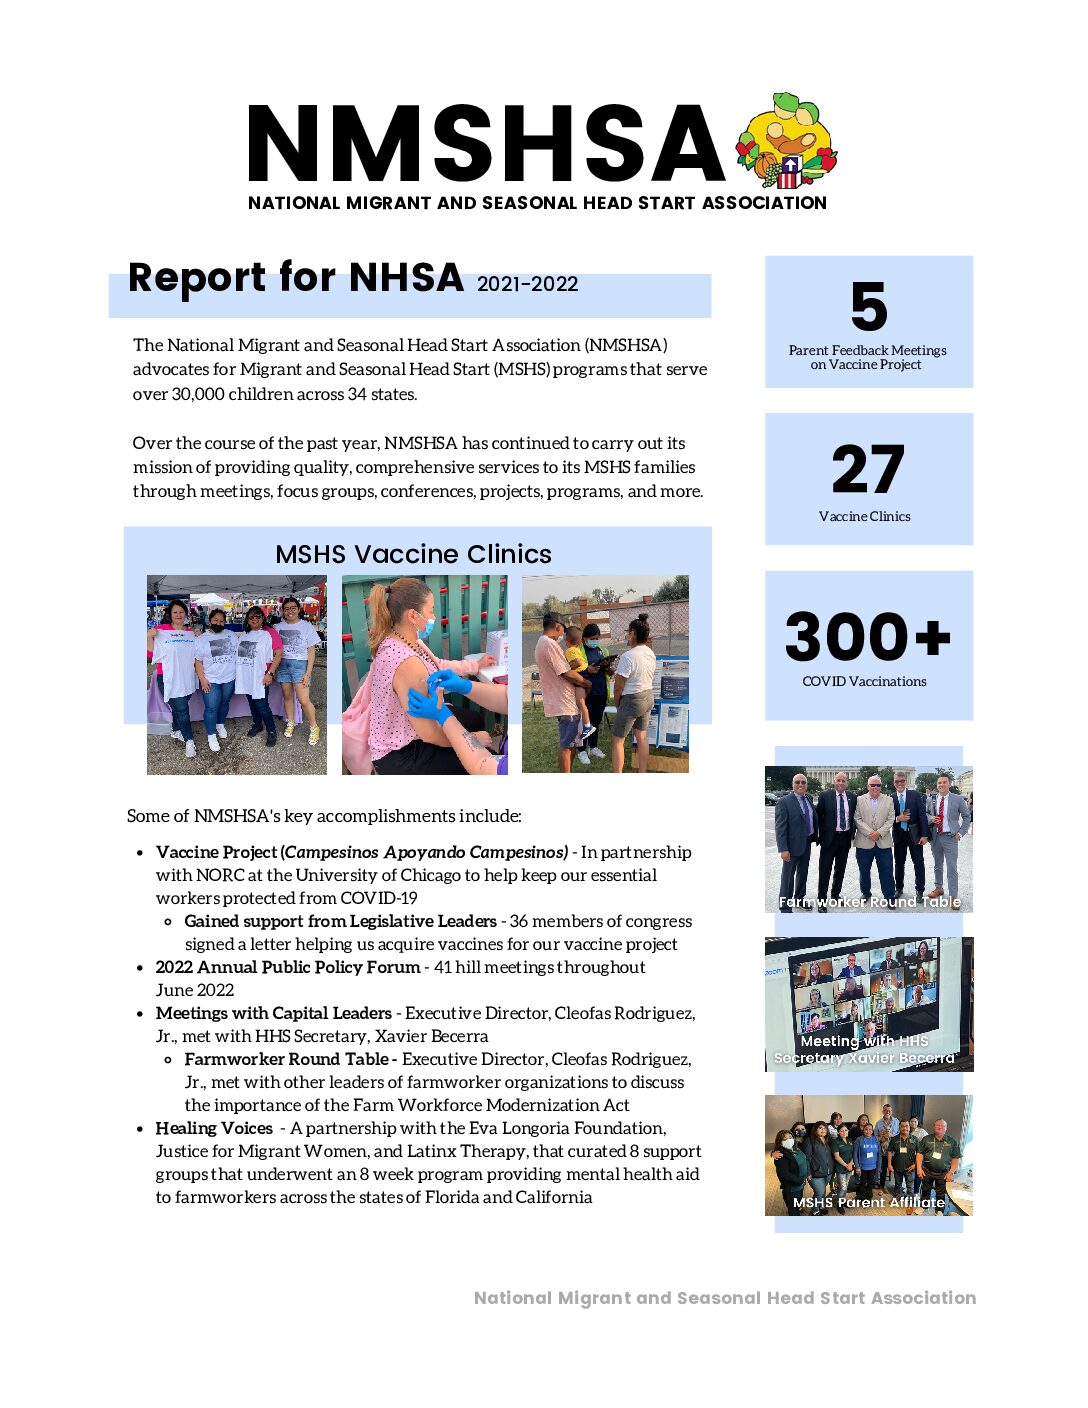 National Migrant and Seasonal Head Start Association Profile NHSA